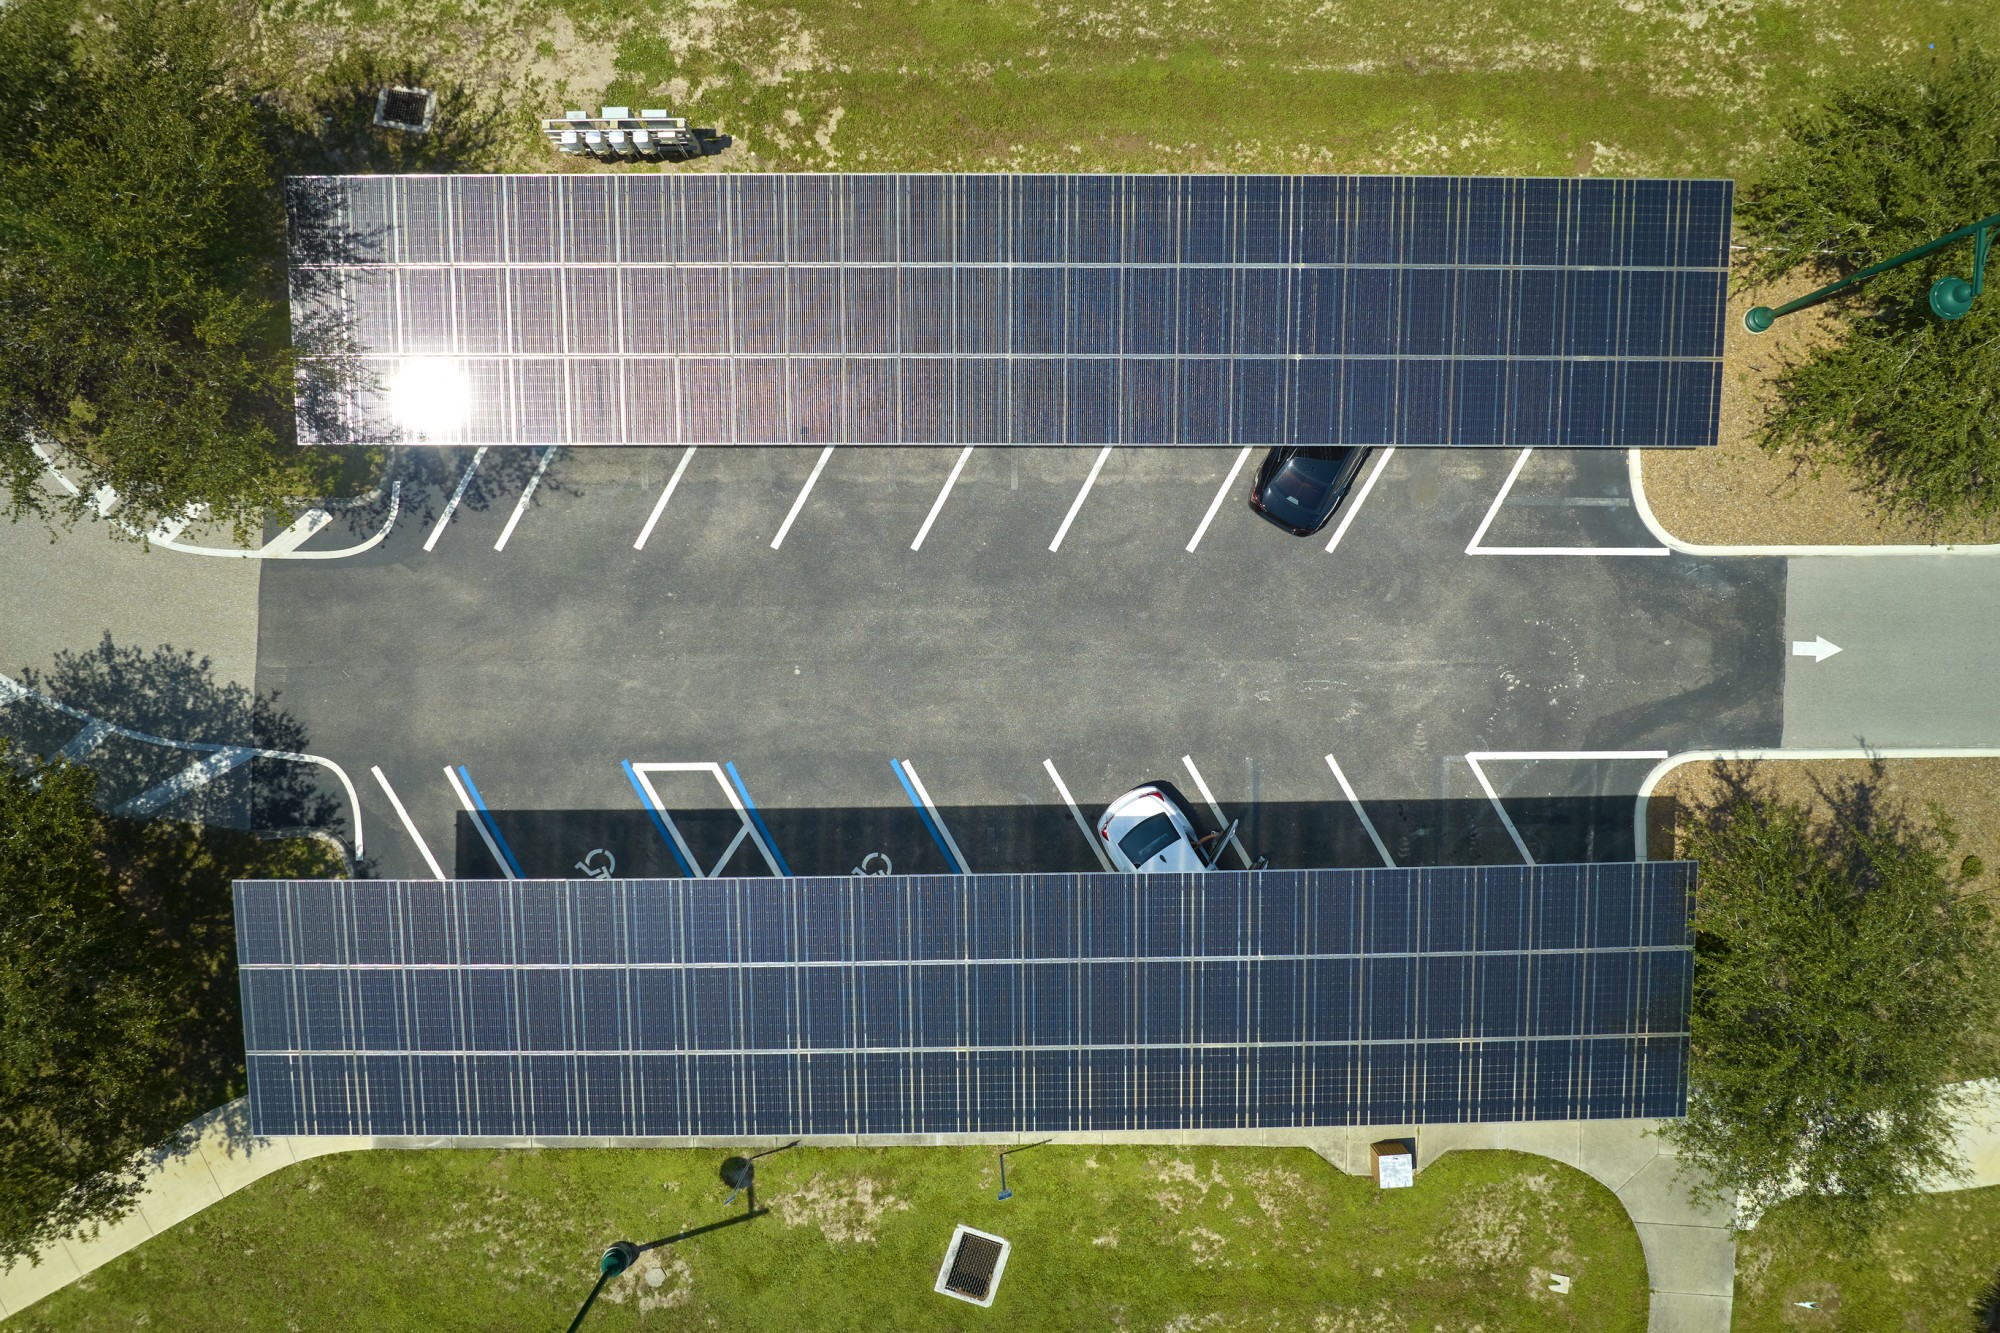 Morgan Stanley Adds Solar Parking Canopies